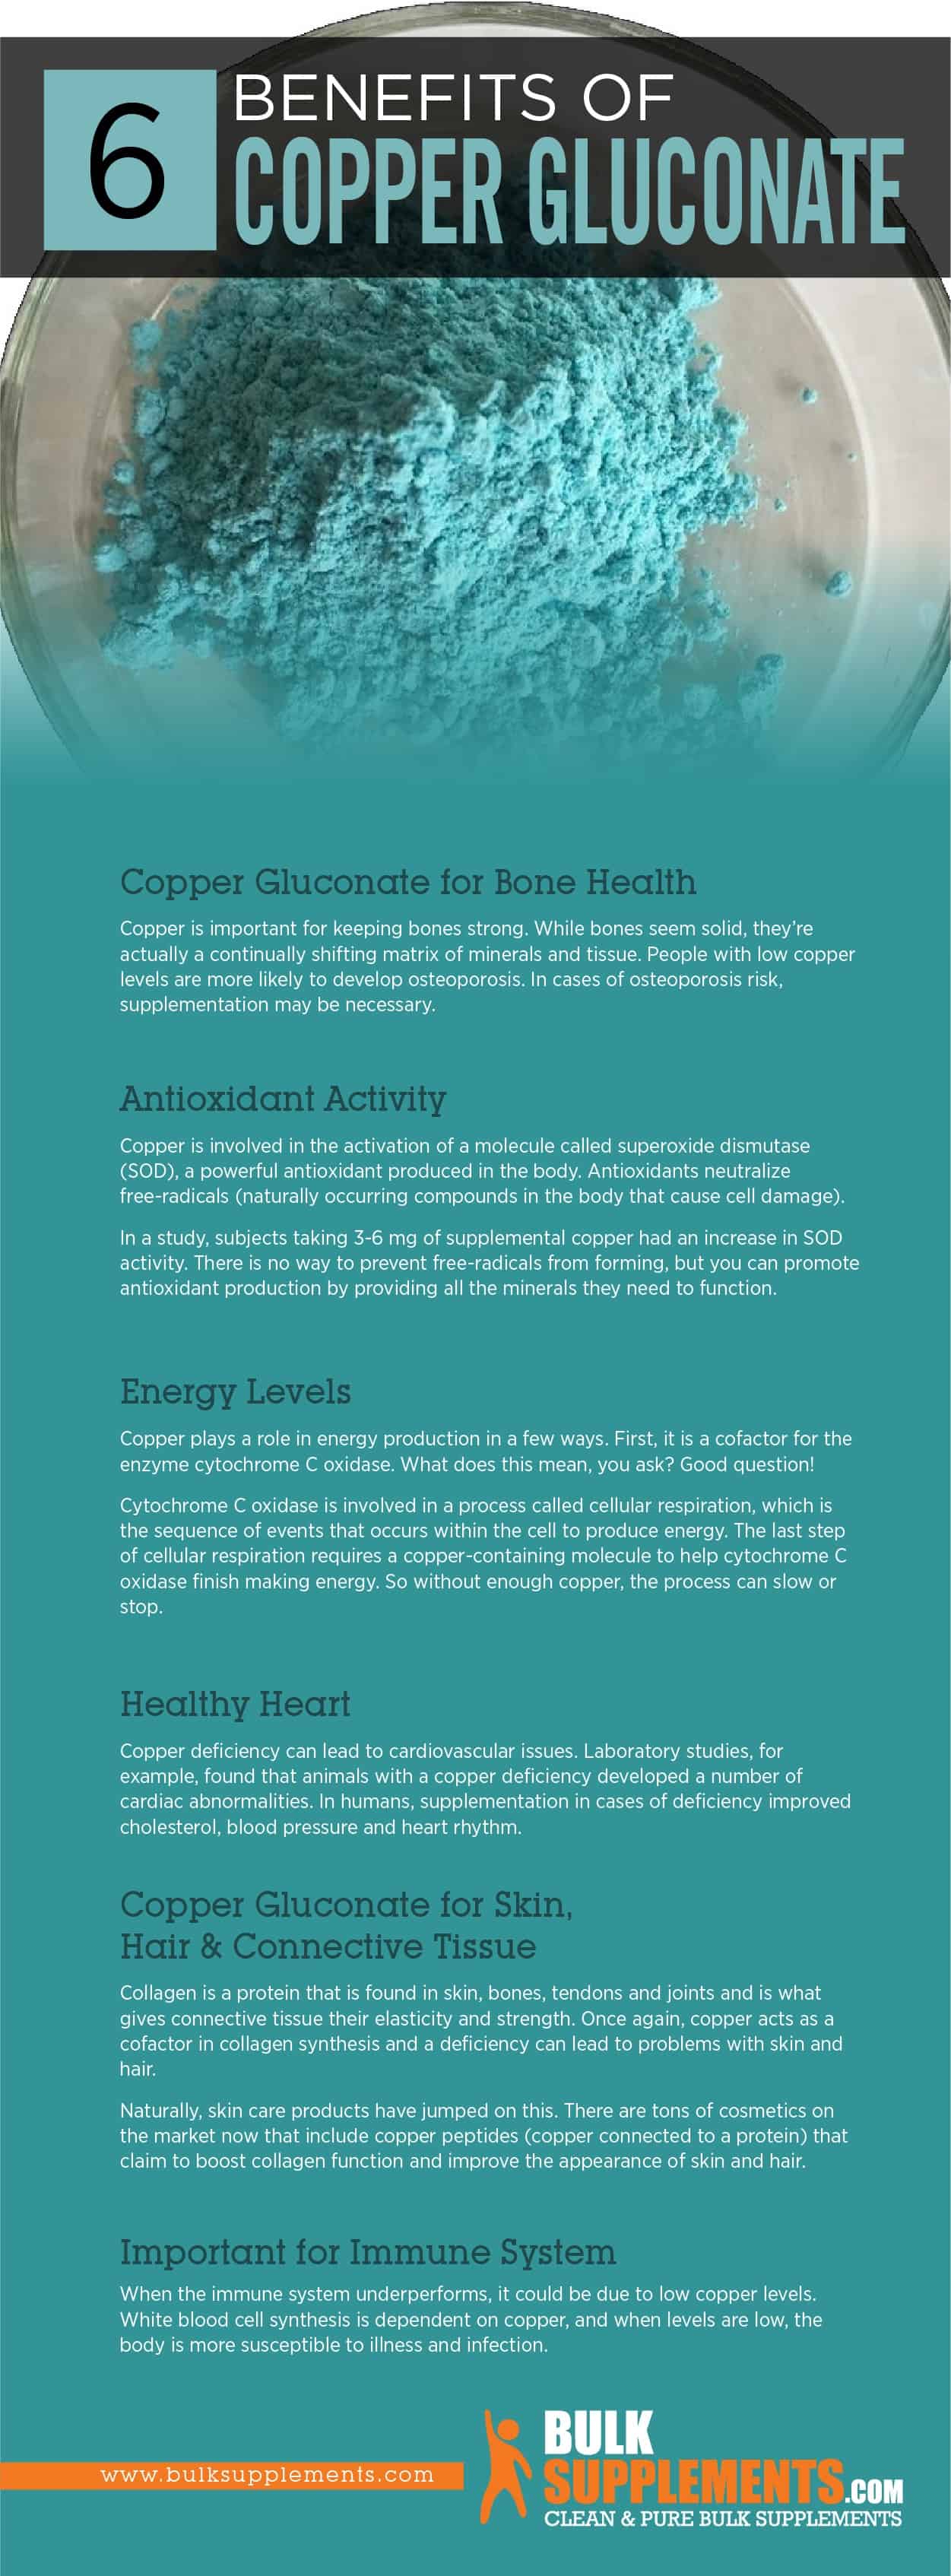 Copper Gluconate Benefits